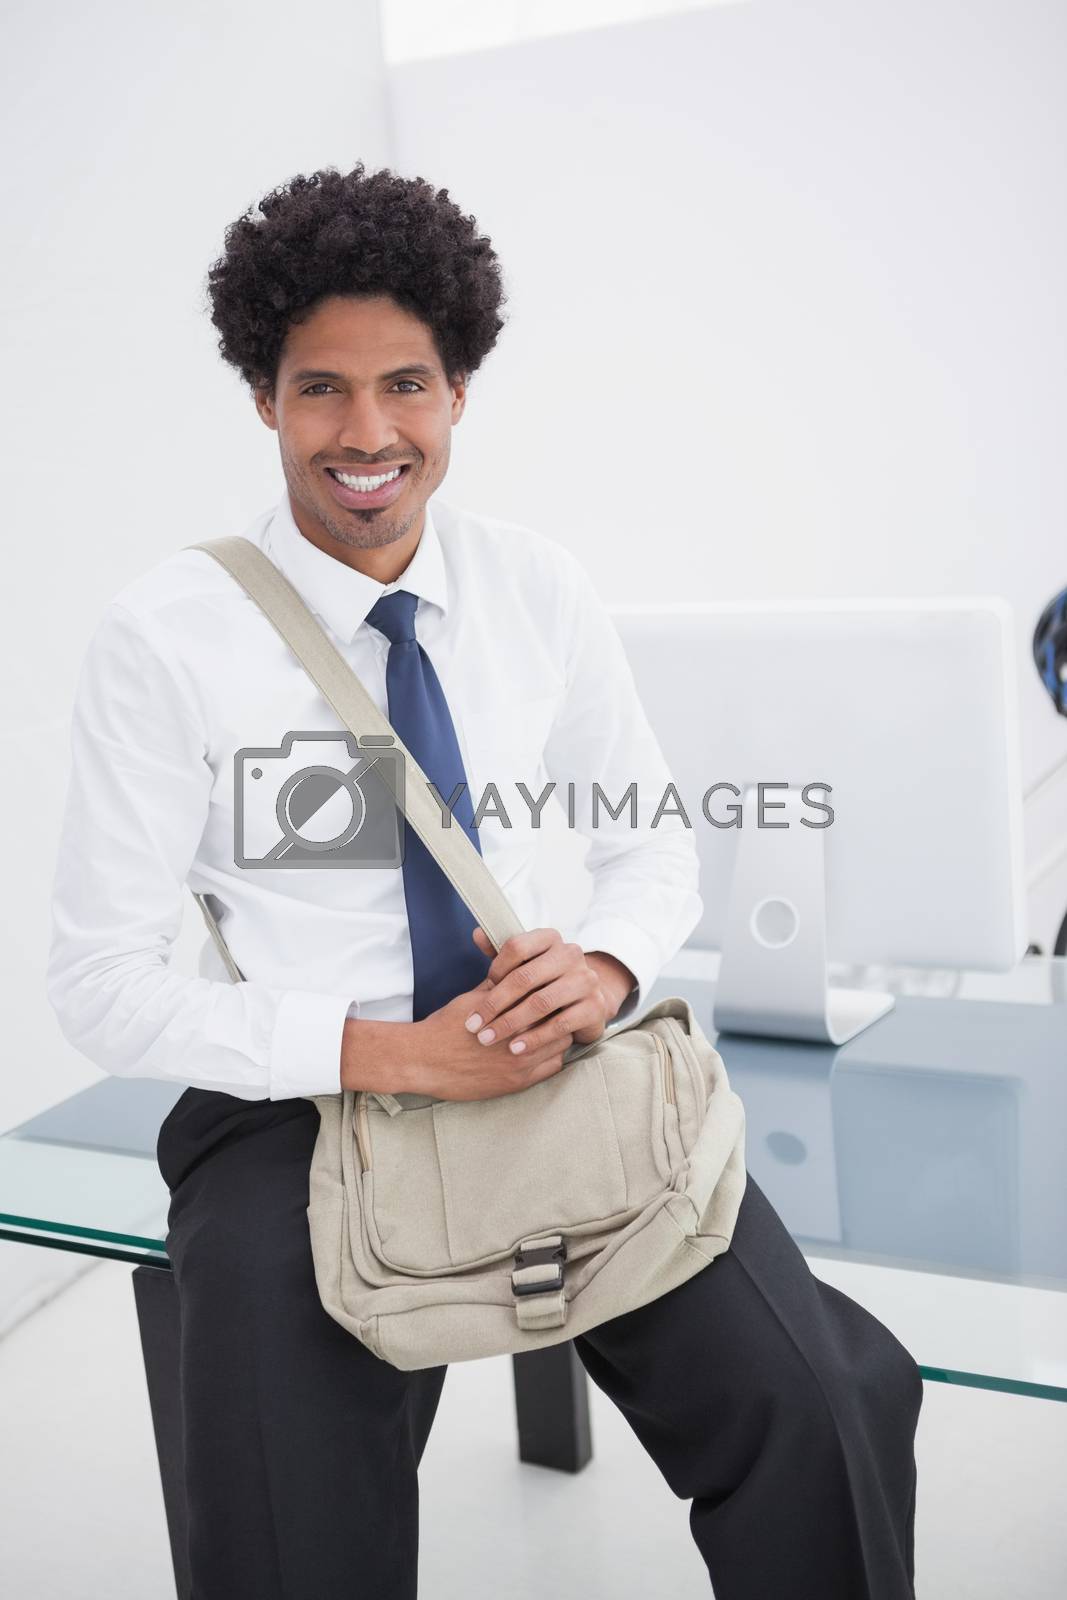 Royalty free image of Smiling businessman with shoulder bag  by Wavebreakmedia